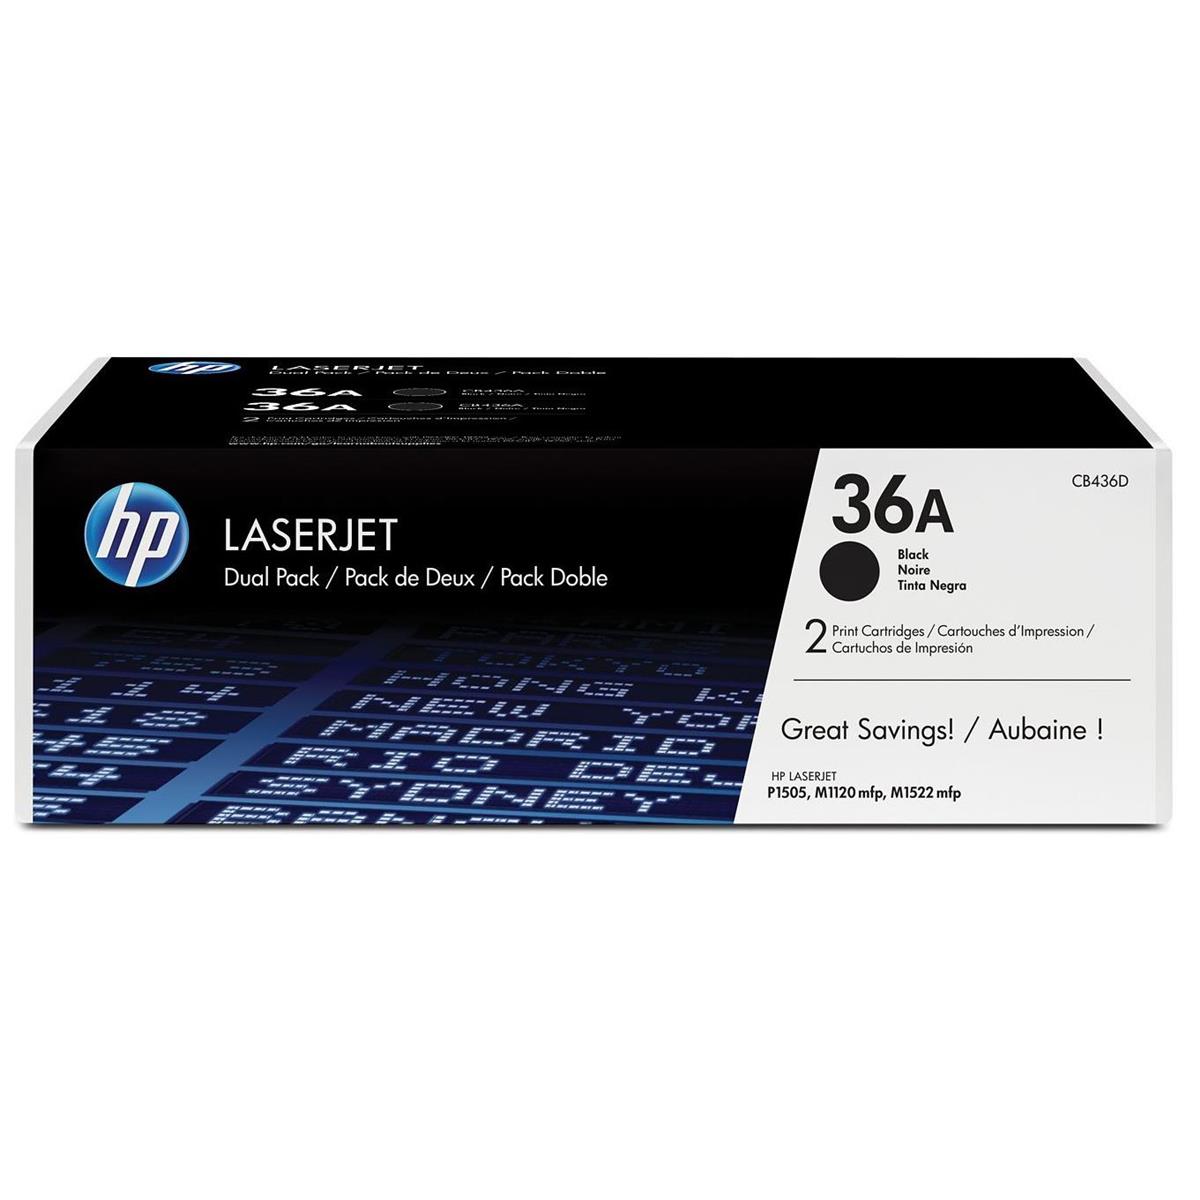 Image of HP CB436D 36A Black Dual Pack Toner Cartridges